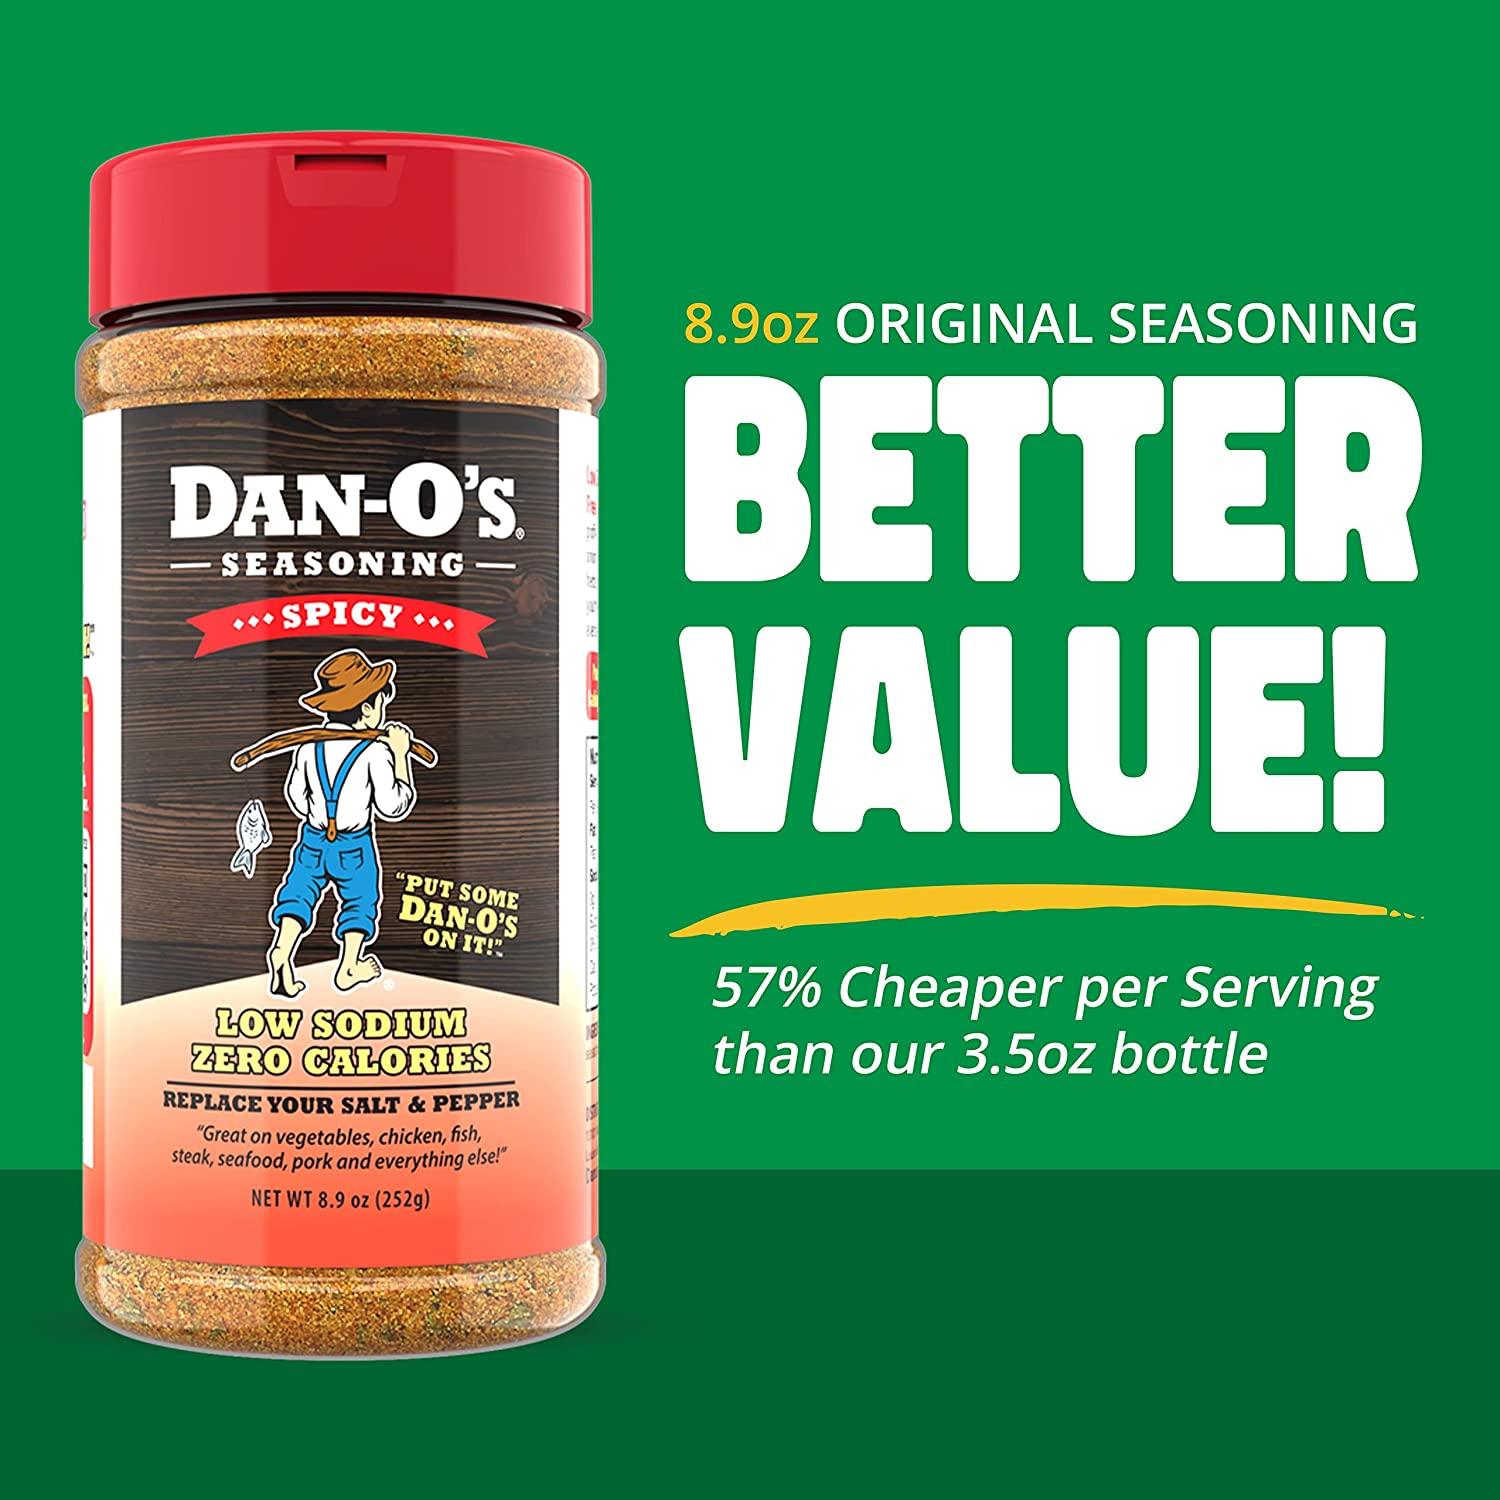 Dan-O's Seasoning Starter Pack - Original & Spicy Flavors, All Natural, Sugar Free, Keto, All Purpose Seasonings, Vegetable Seasoning, Meat  Seasoning, Low Sodium Seasoning, Cooking Spices